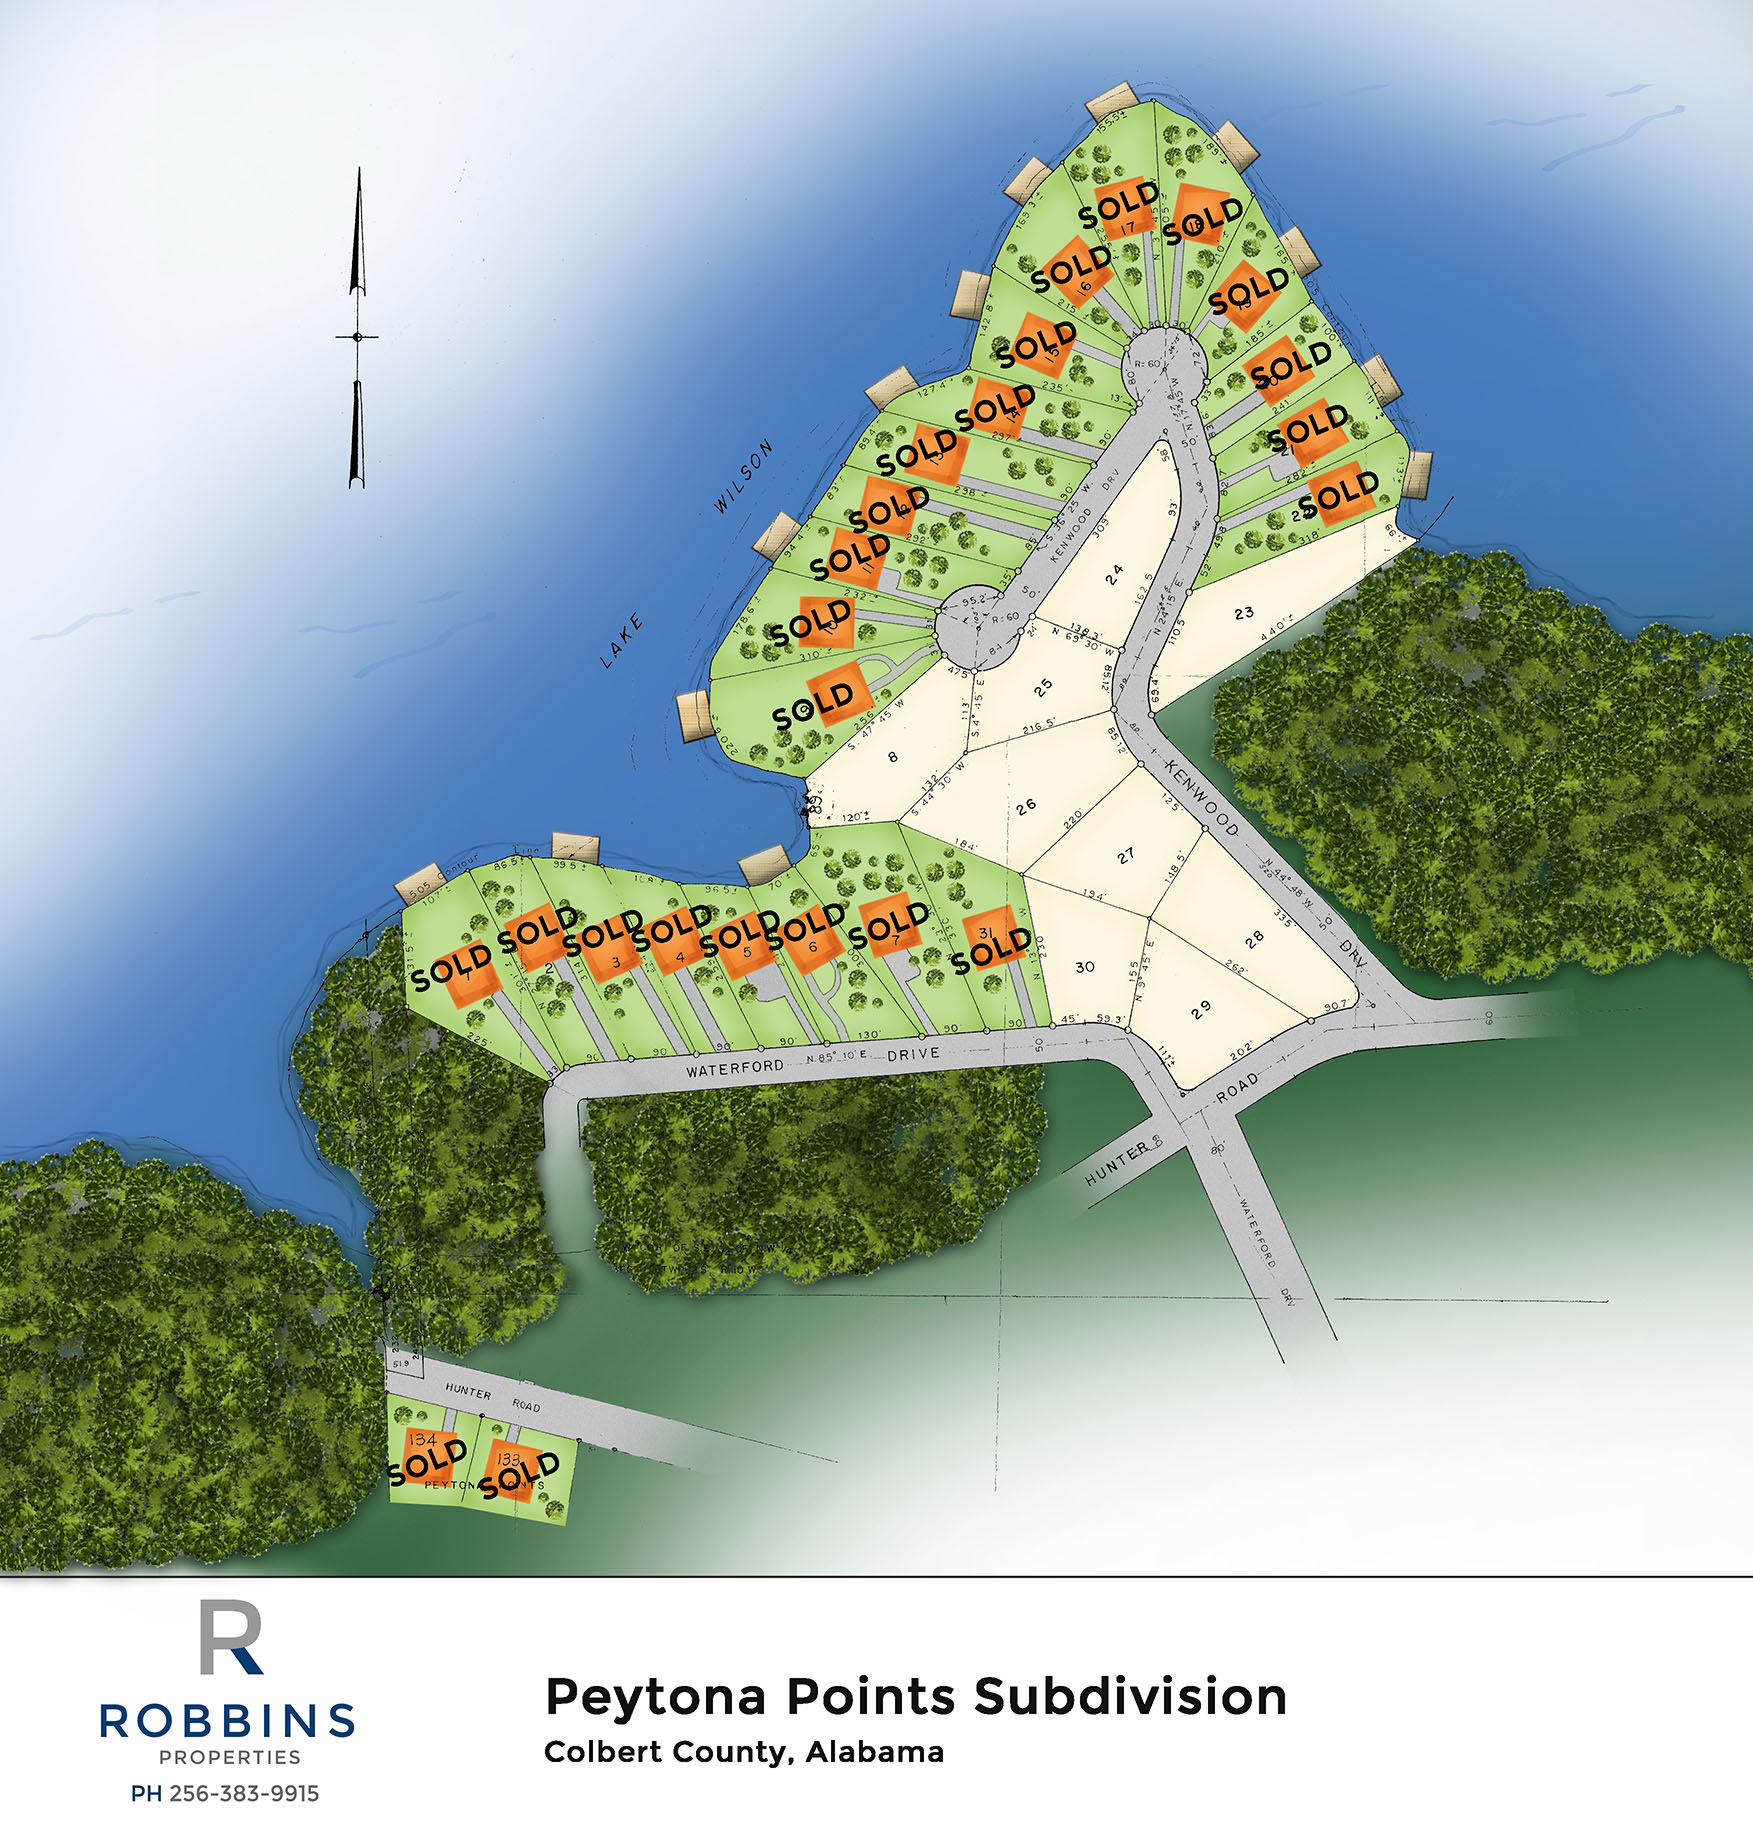 Peytona Points Subdivision